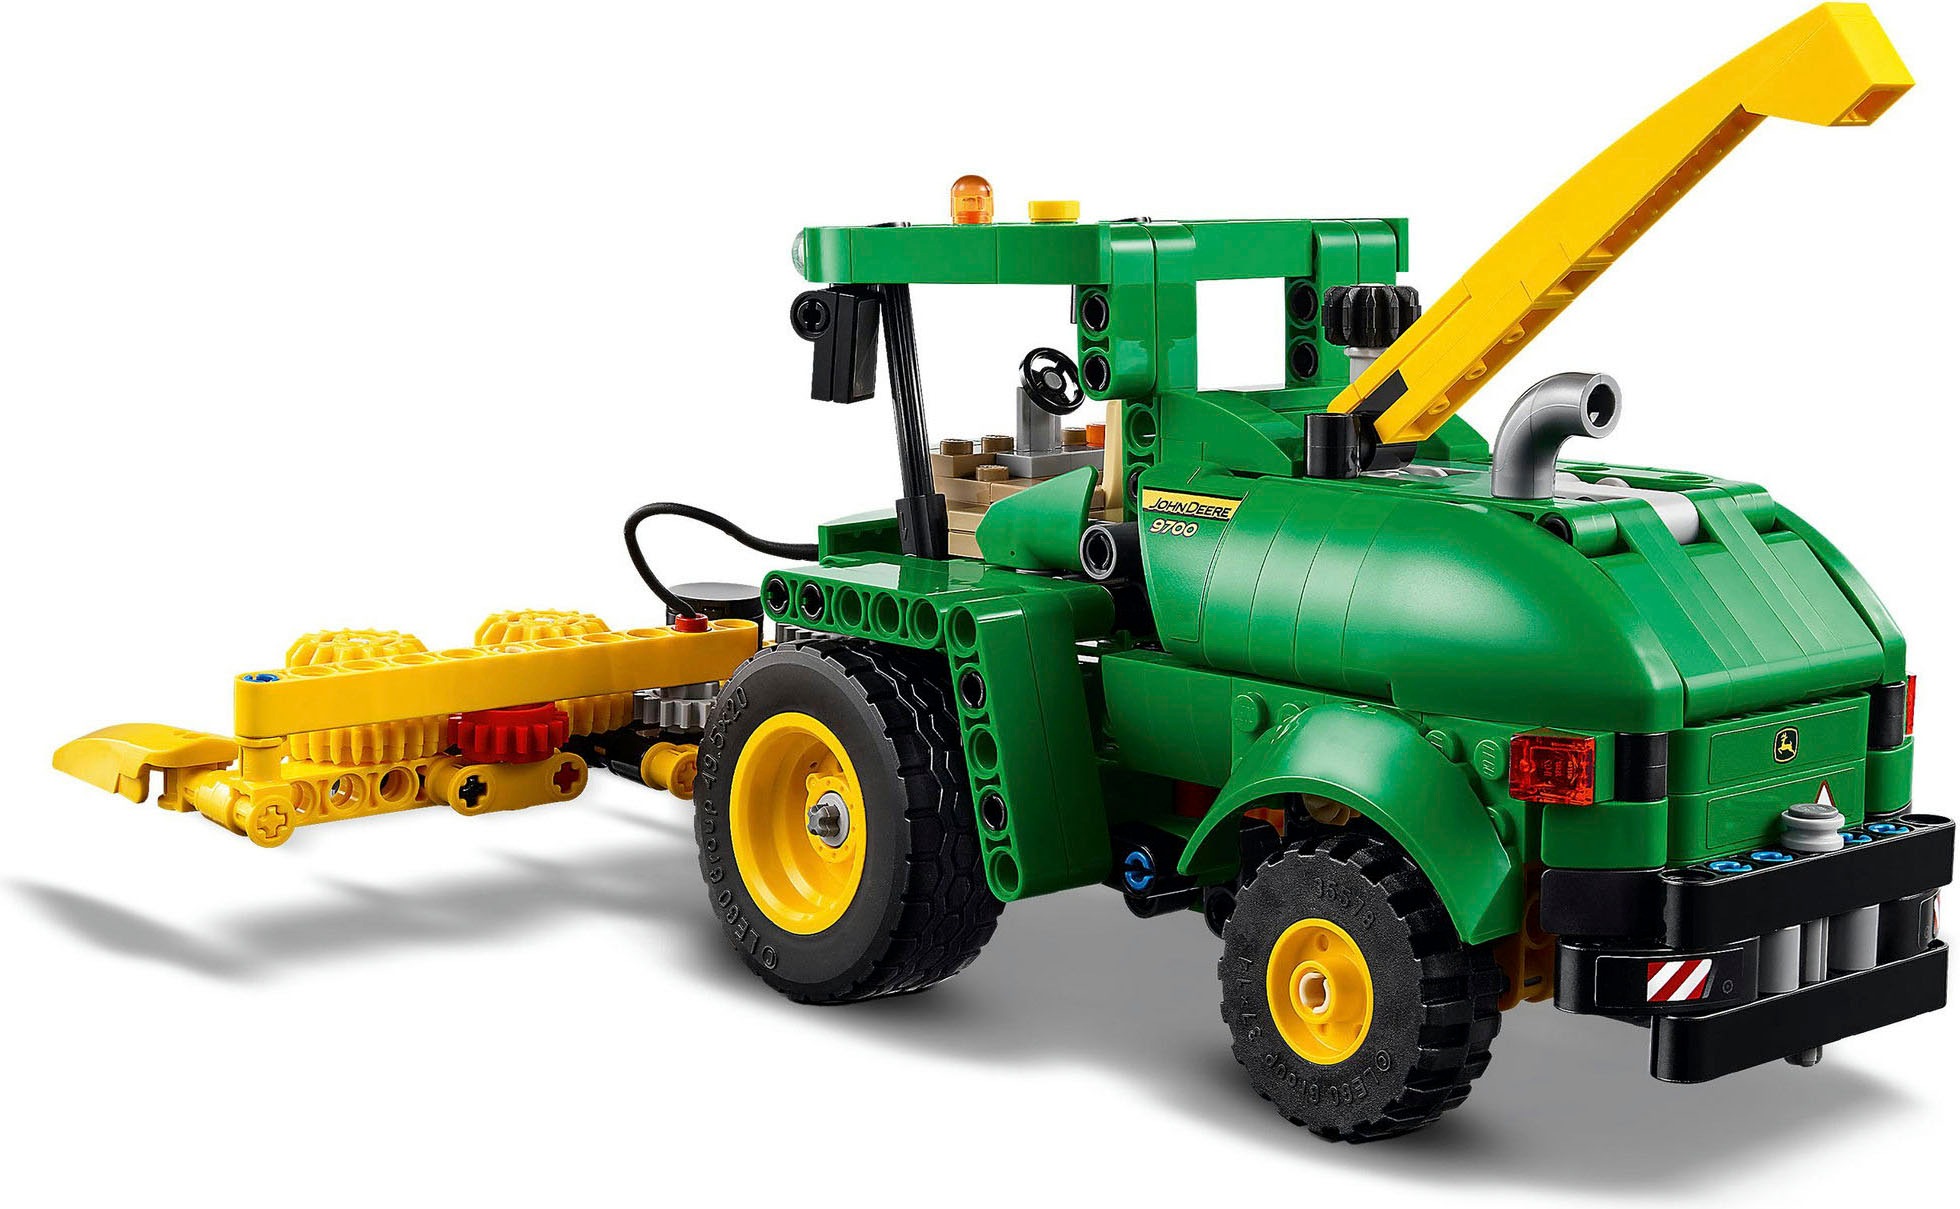 LEGO® Konstruktionsspielsteine »John Deere 9700 Forage Harvester (42168), LEGO Technic«, (559 St.), Made in Europe